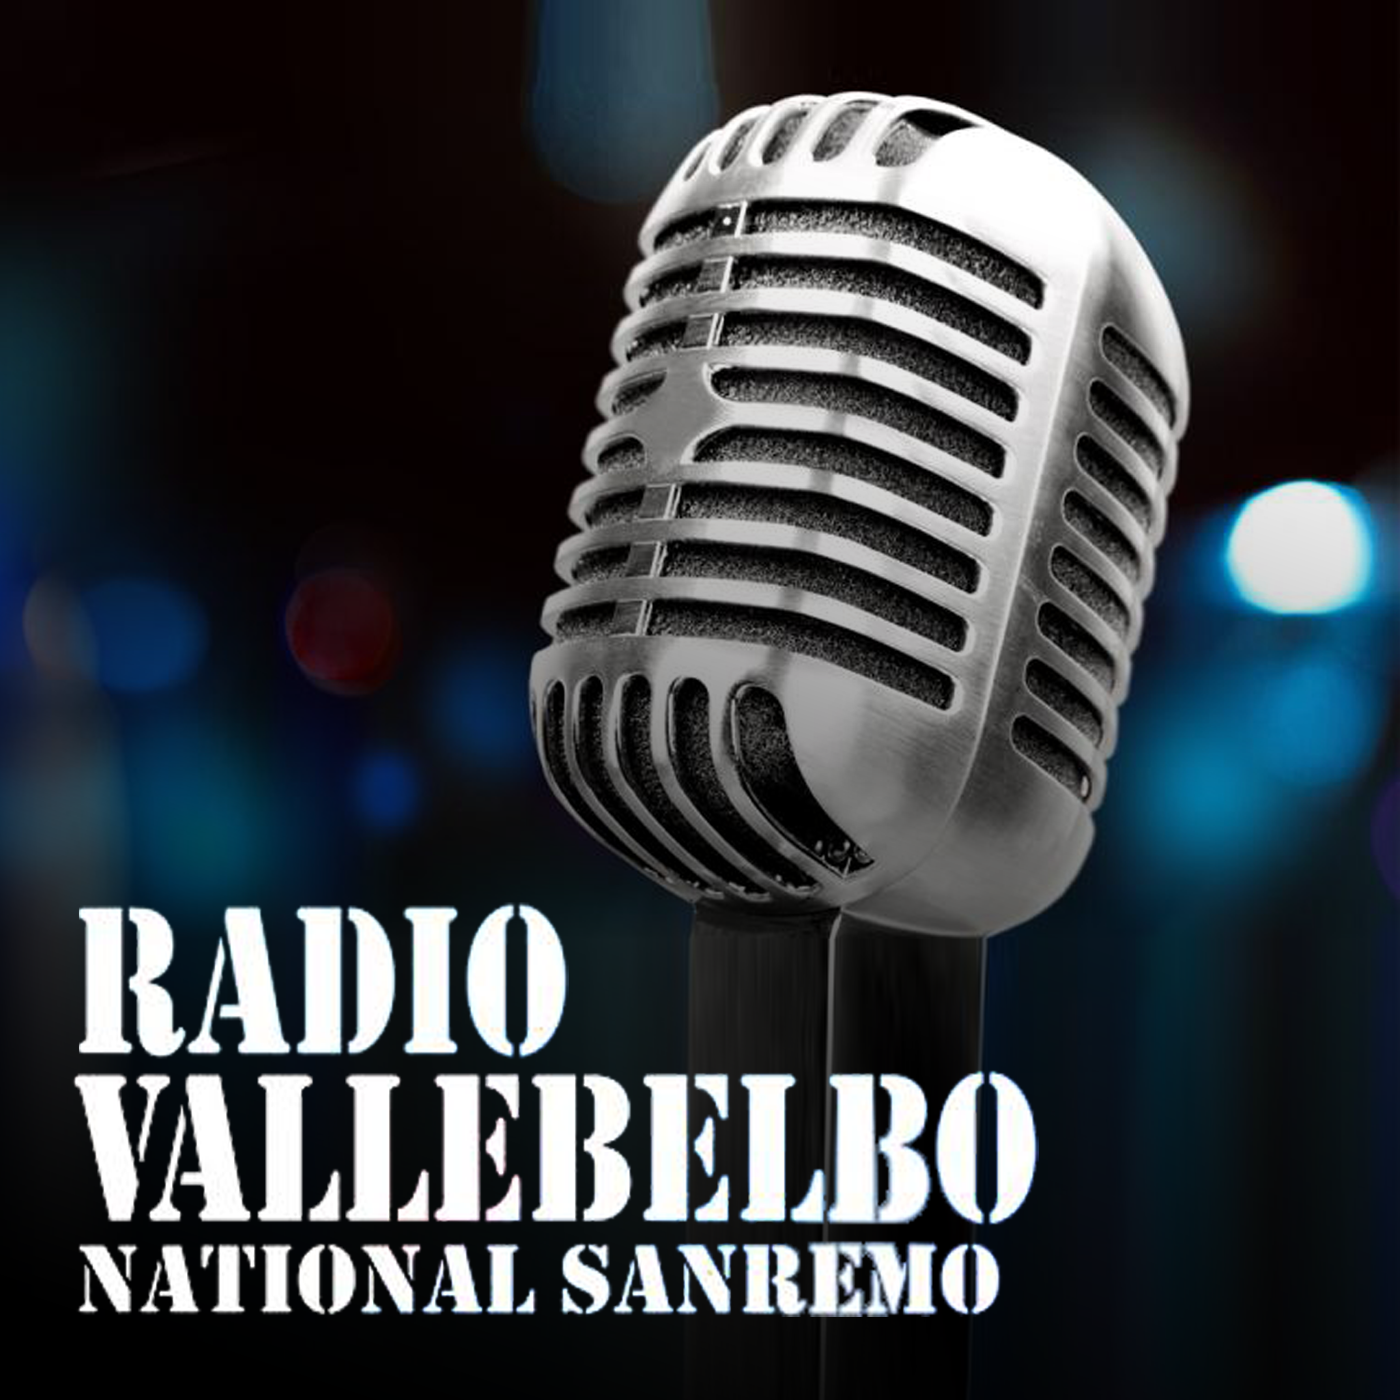 Radio Vallebelbo National Sanremo